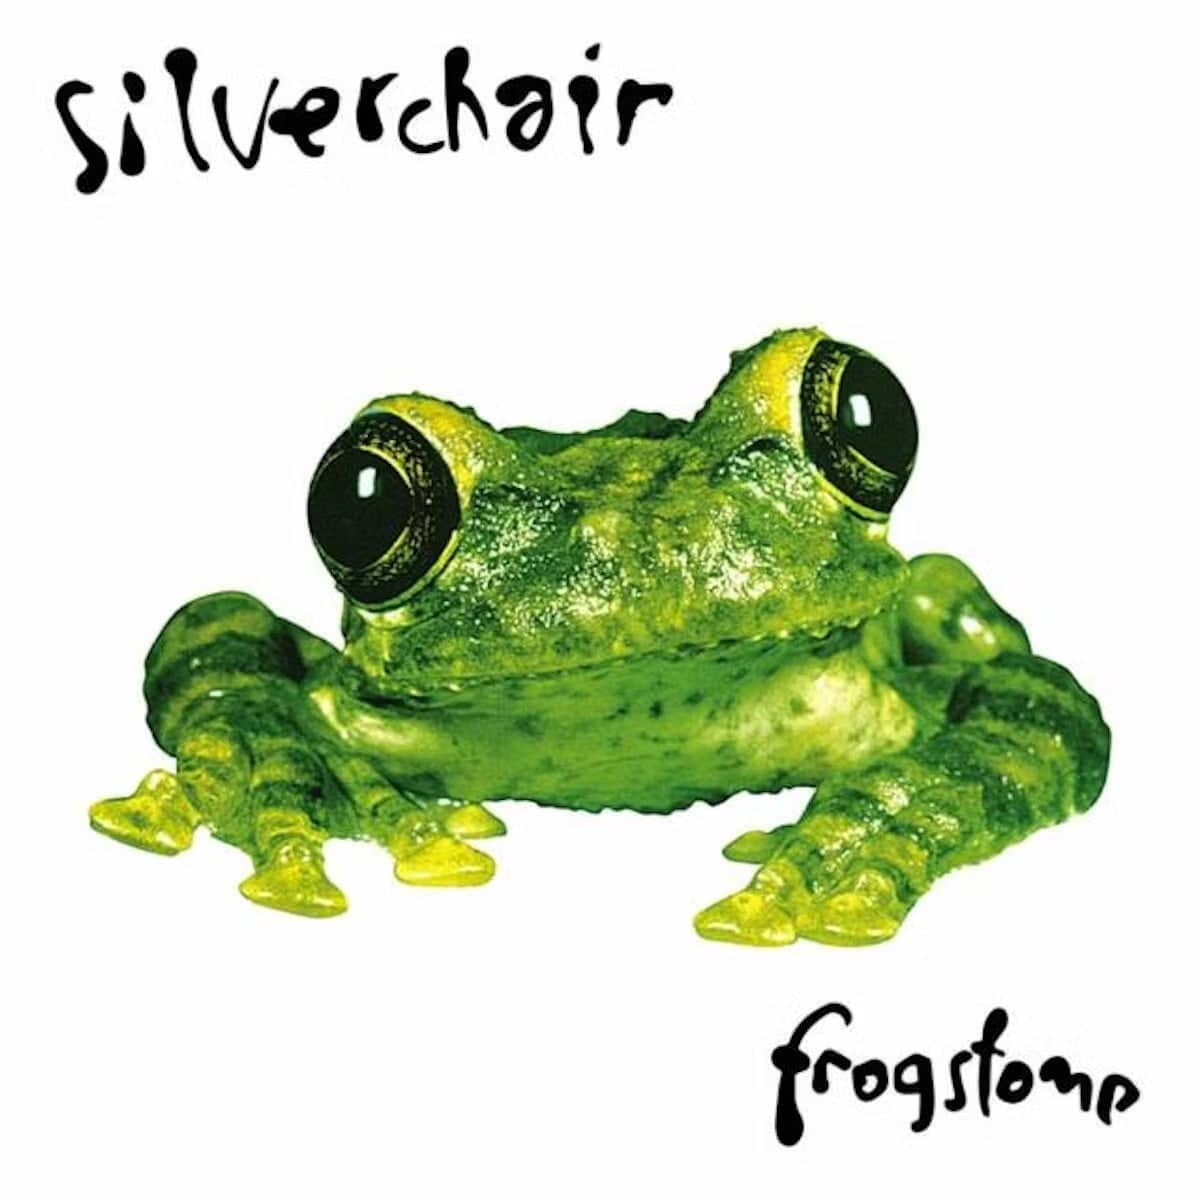 Silverchair - Frogstomp - Vinyl Record 2LP 180g Import - Indie Vinyl Den